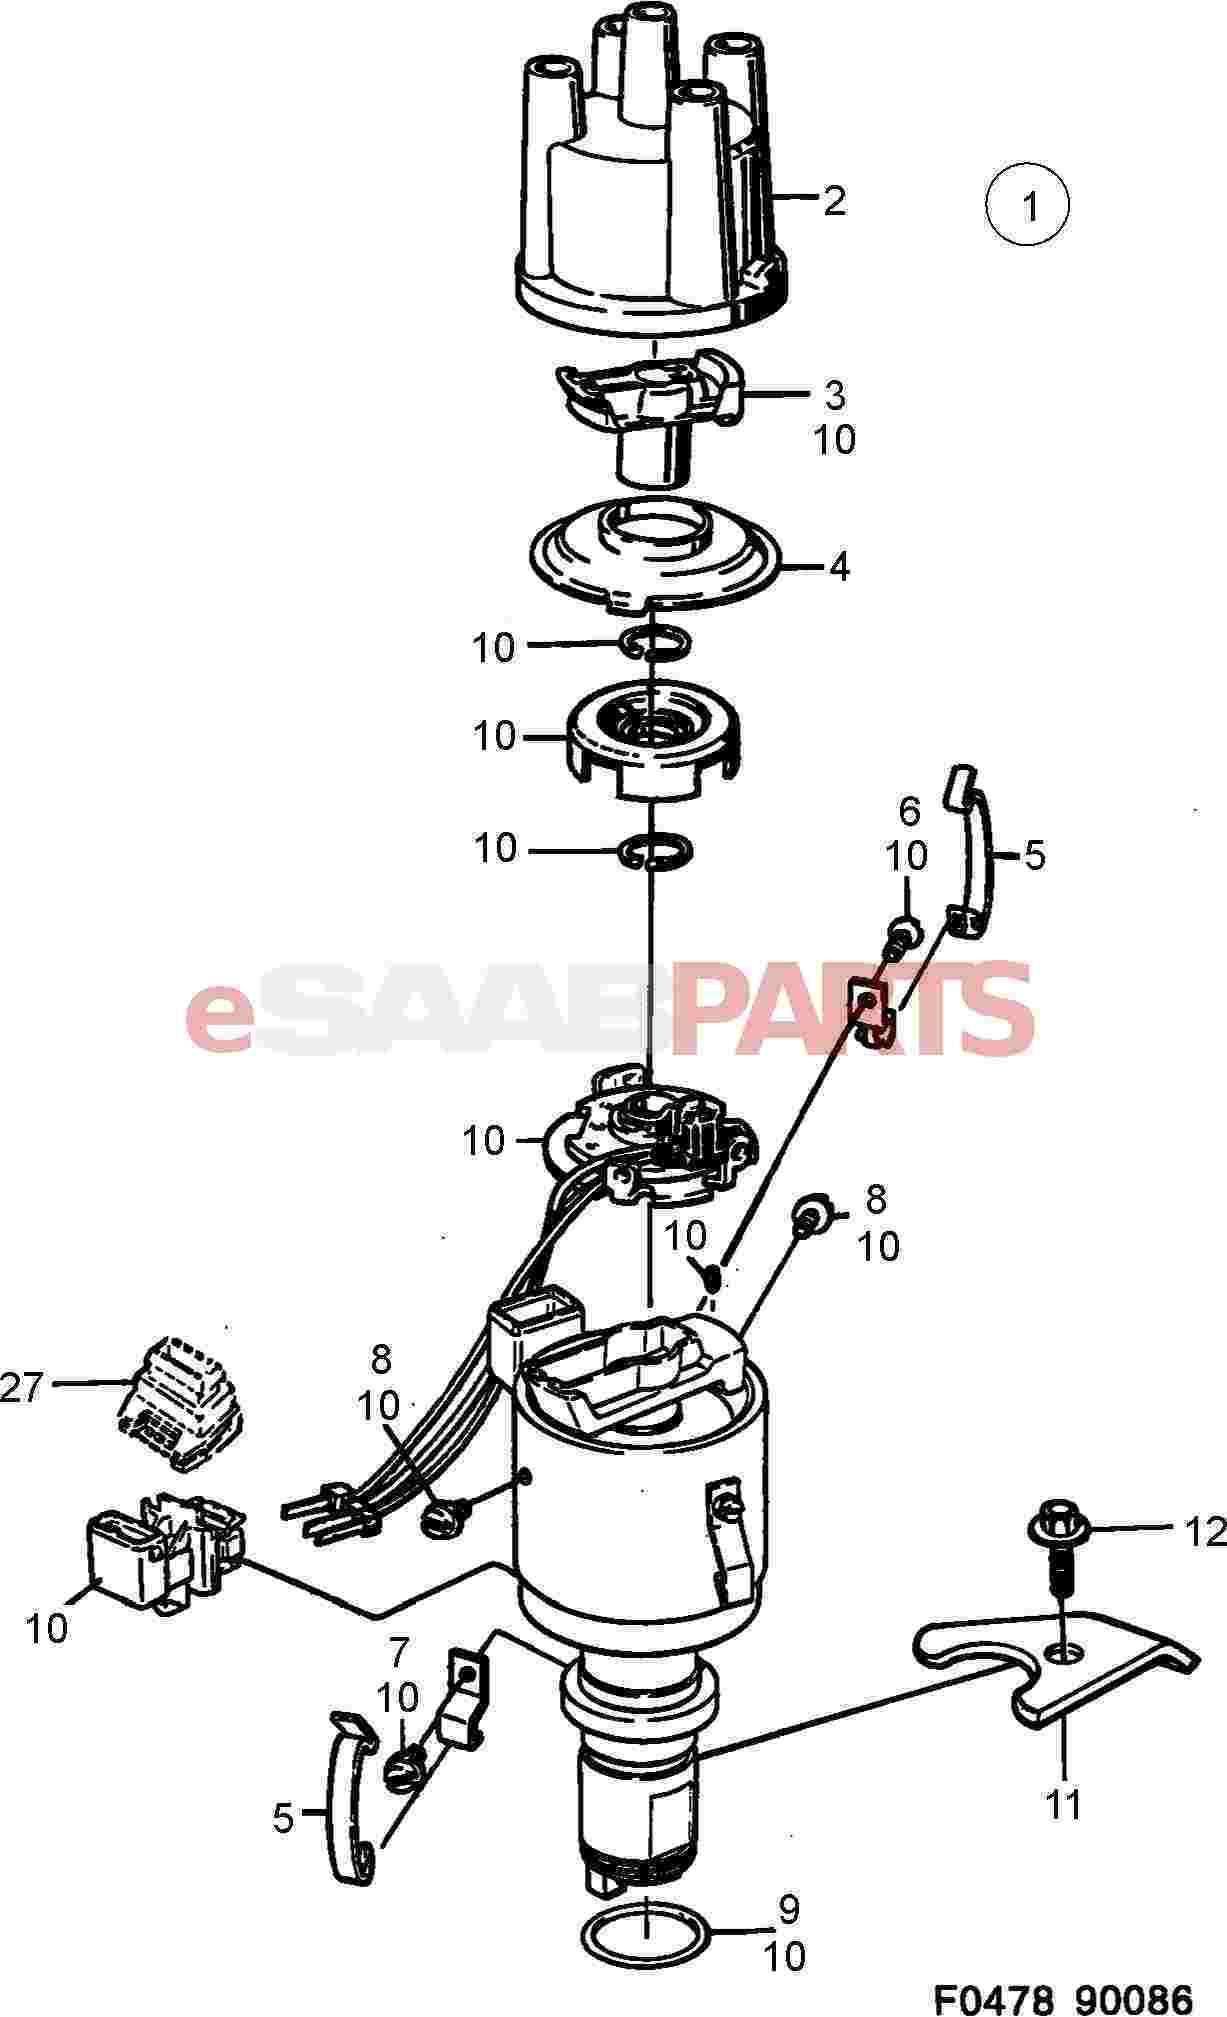 7564420] SAAB Rotor - Saab Parts from eSaabParts.com